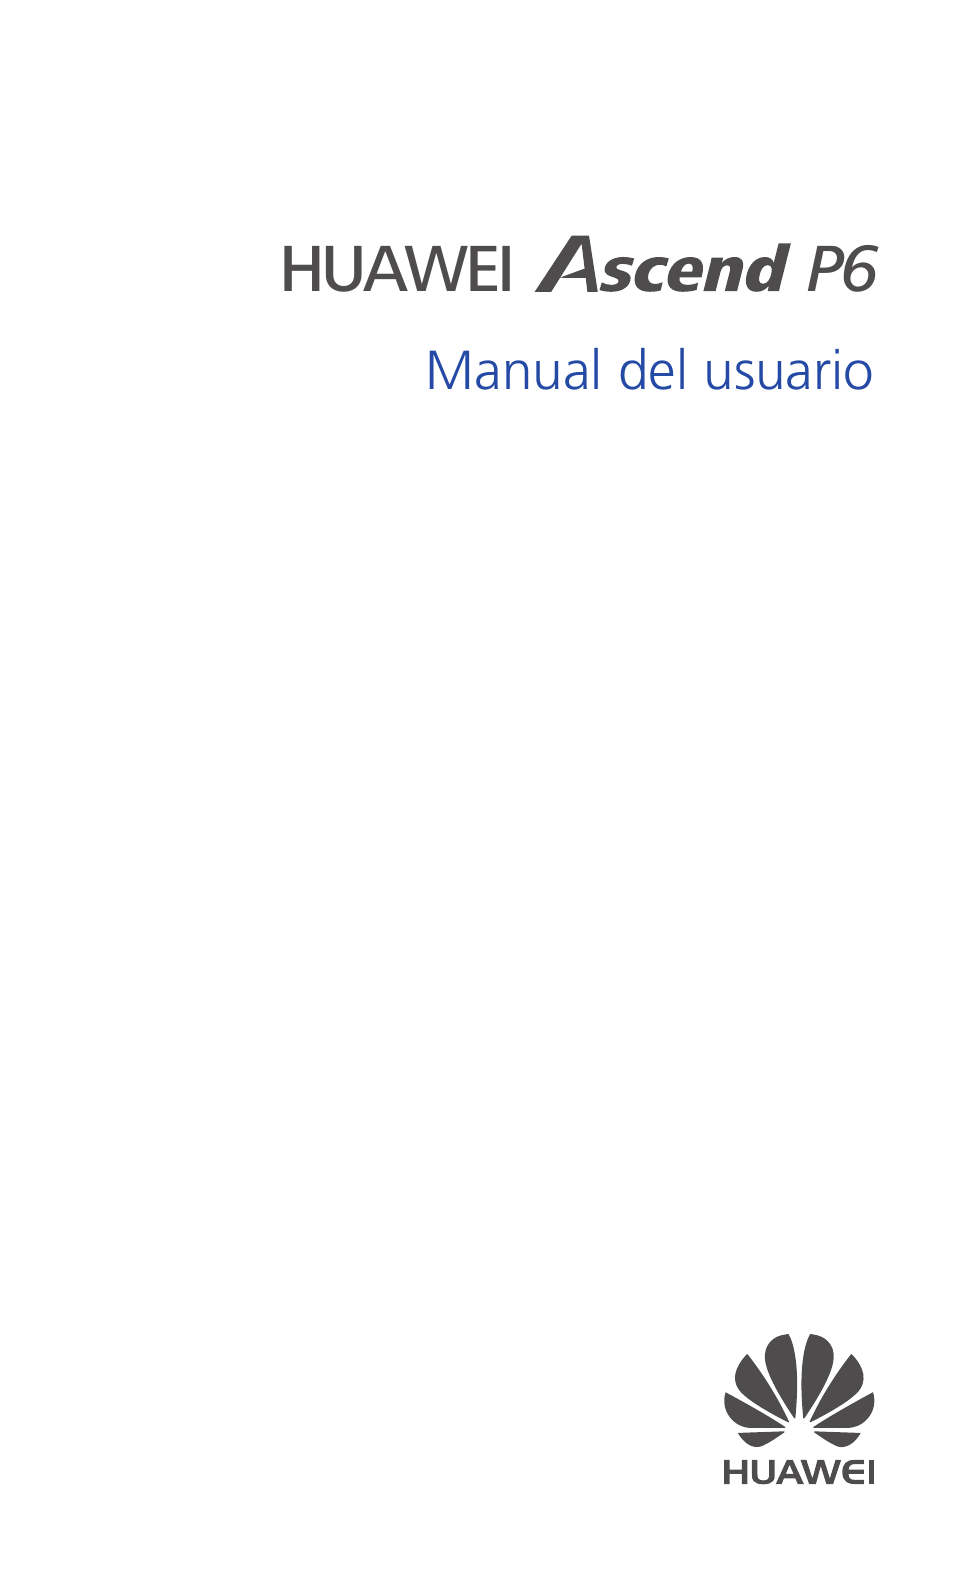 Huawei Ascend P6 User Guide Manual del usuario | Páginas: 114